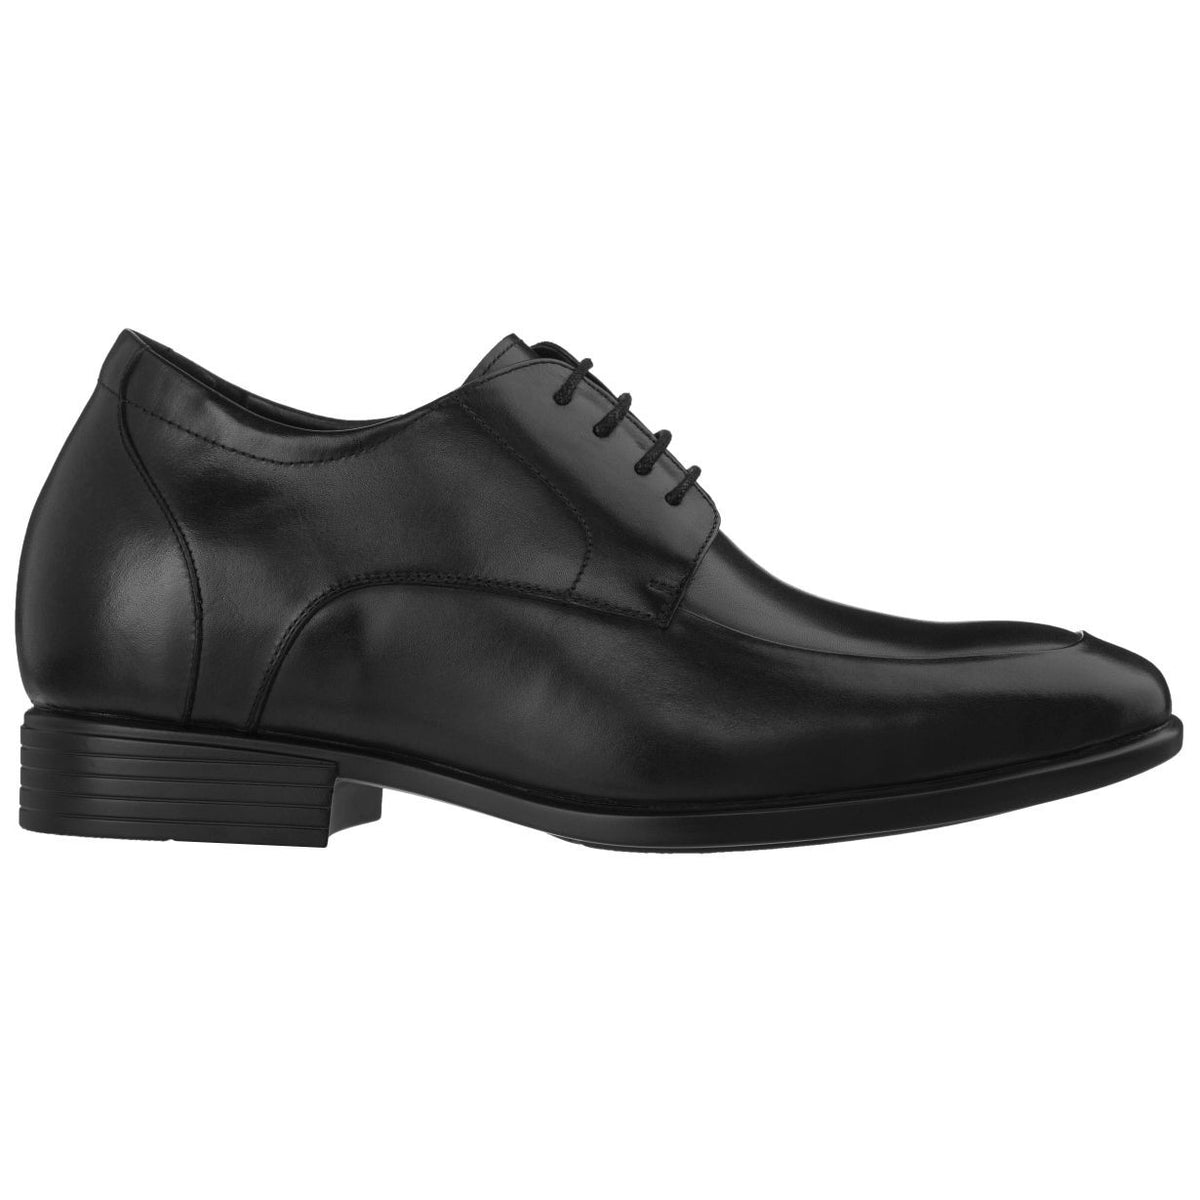 CALTO Y4091 Dress Elevator Shoes Black 3.2 Inches – Tallmenshoes.com